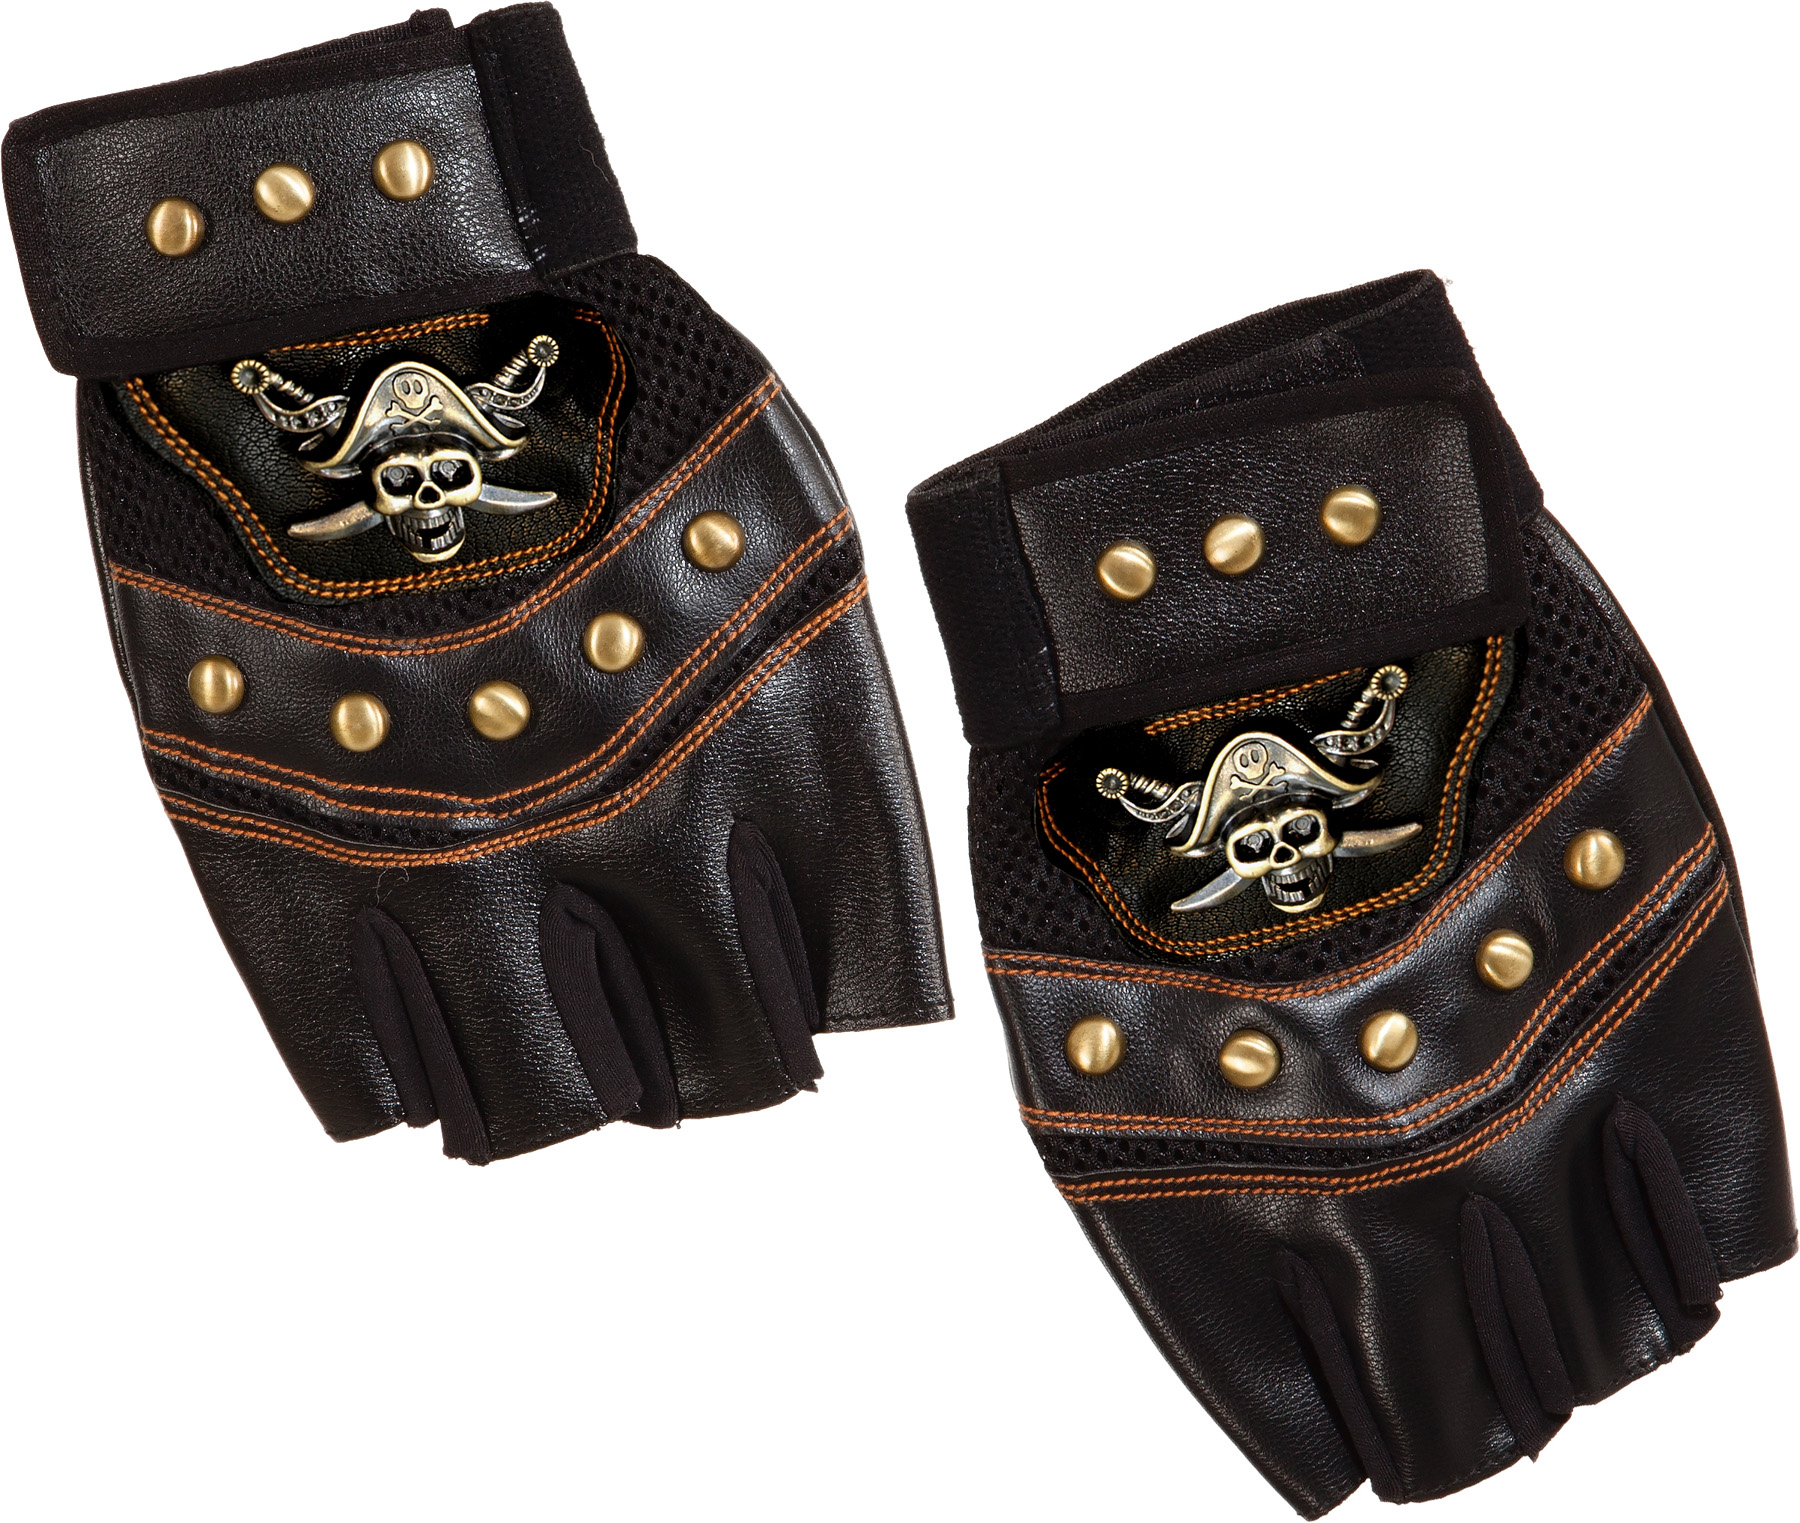 Pirate gloves de luxe 